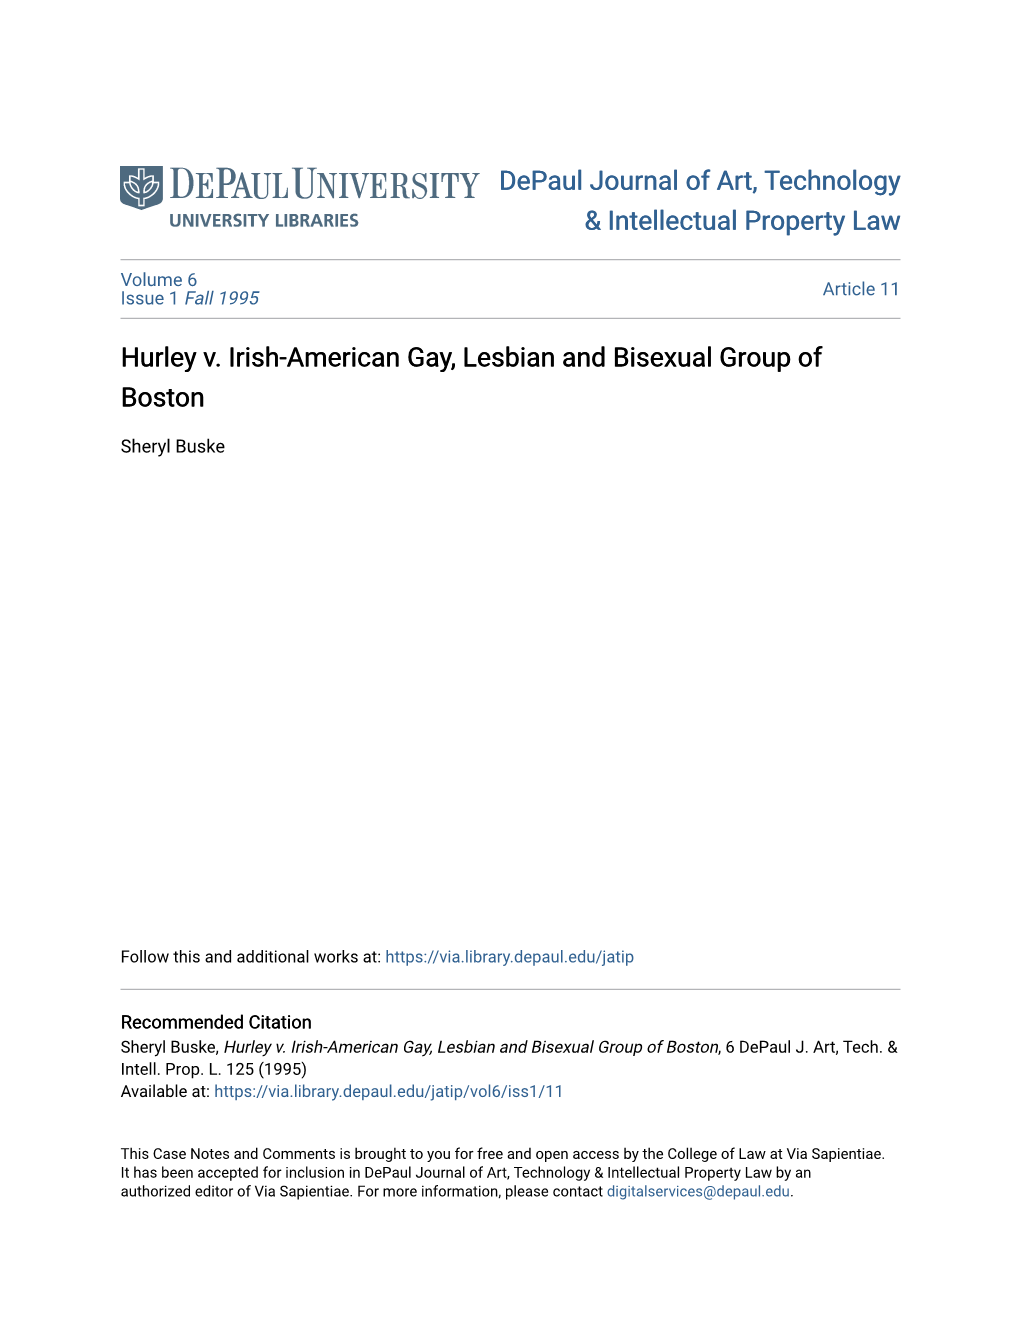 Hurley V. Irish-American Gay, Lesbian and Bisexual Group of Boston